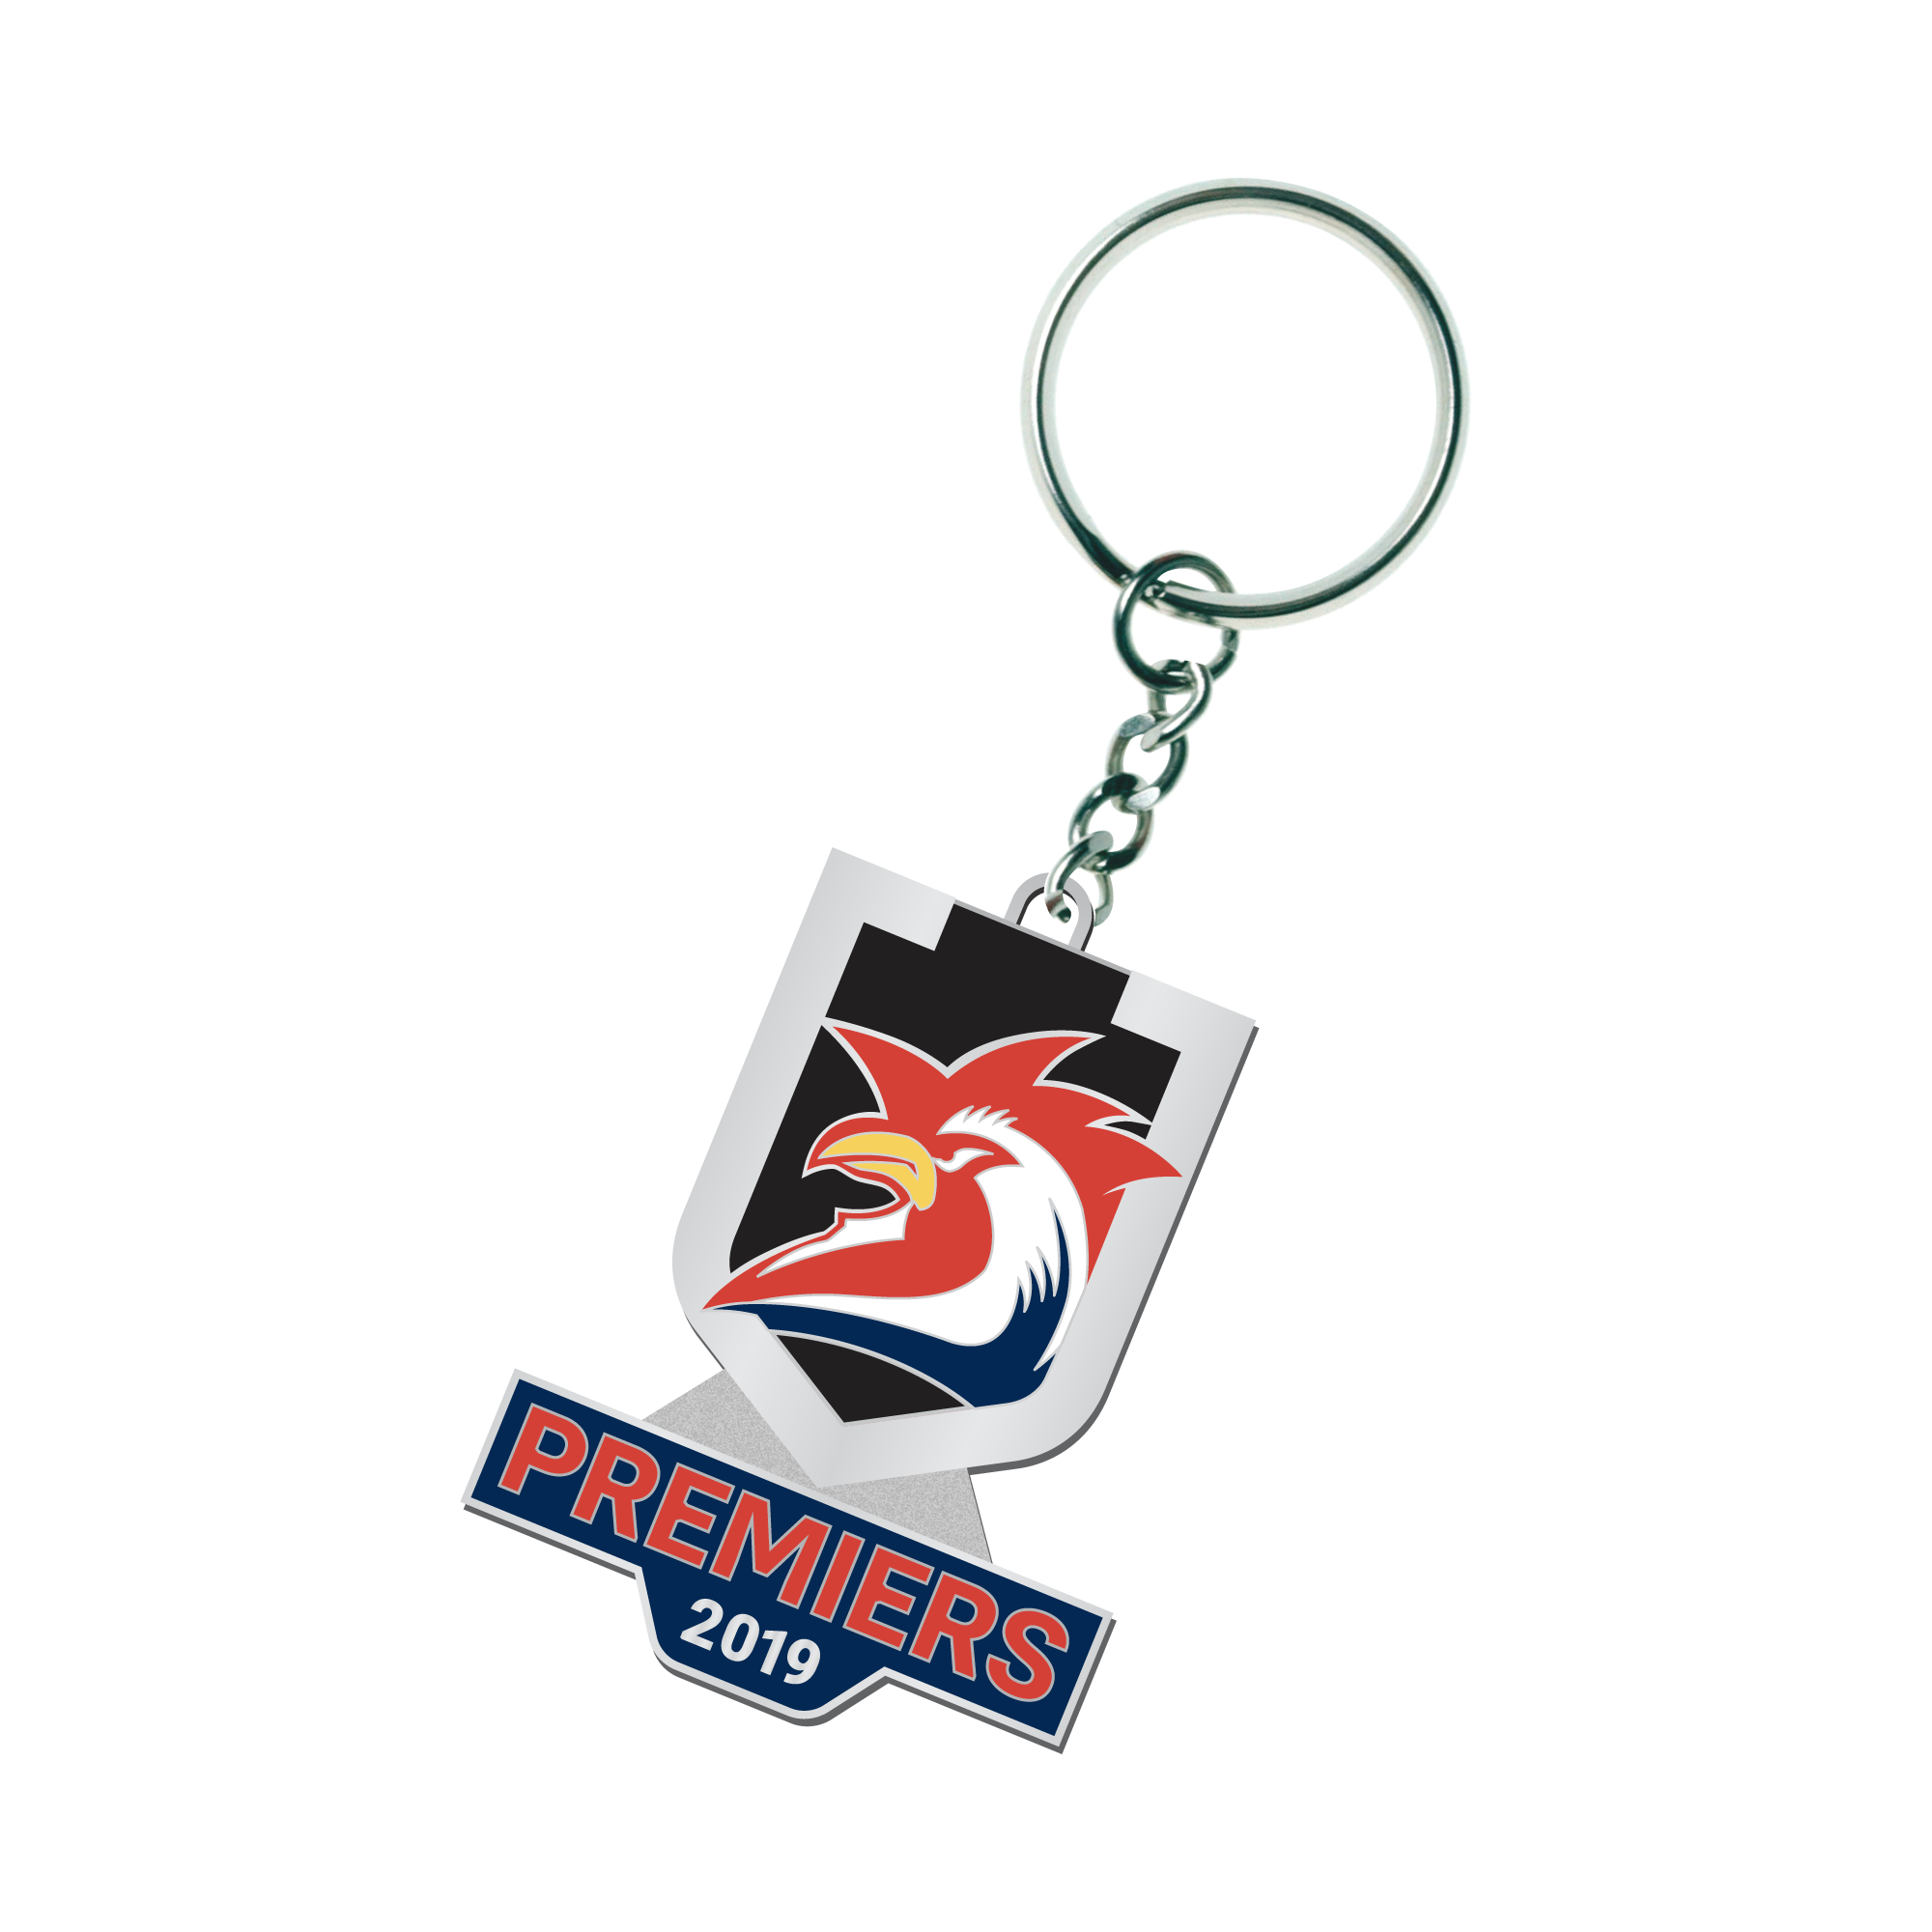 Sydney Roosters 2019 Premiers Logo Keyring 